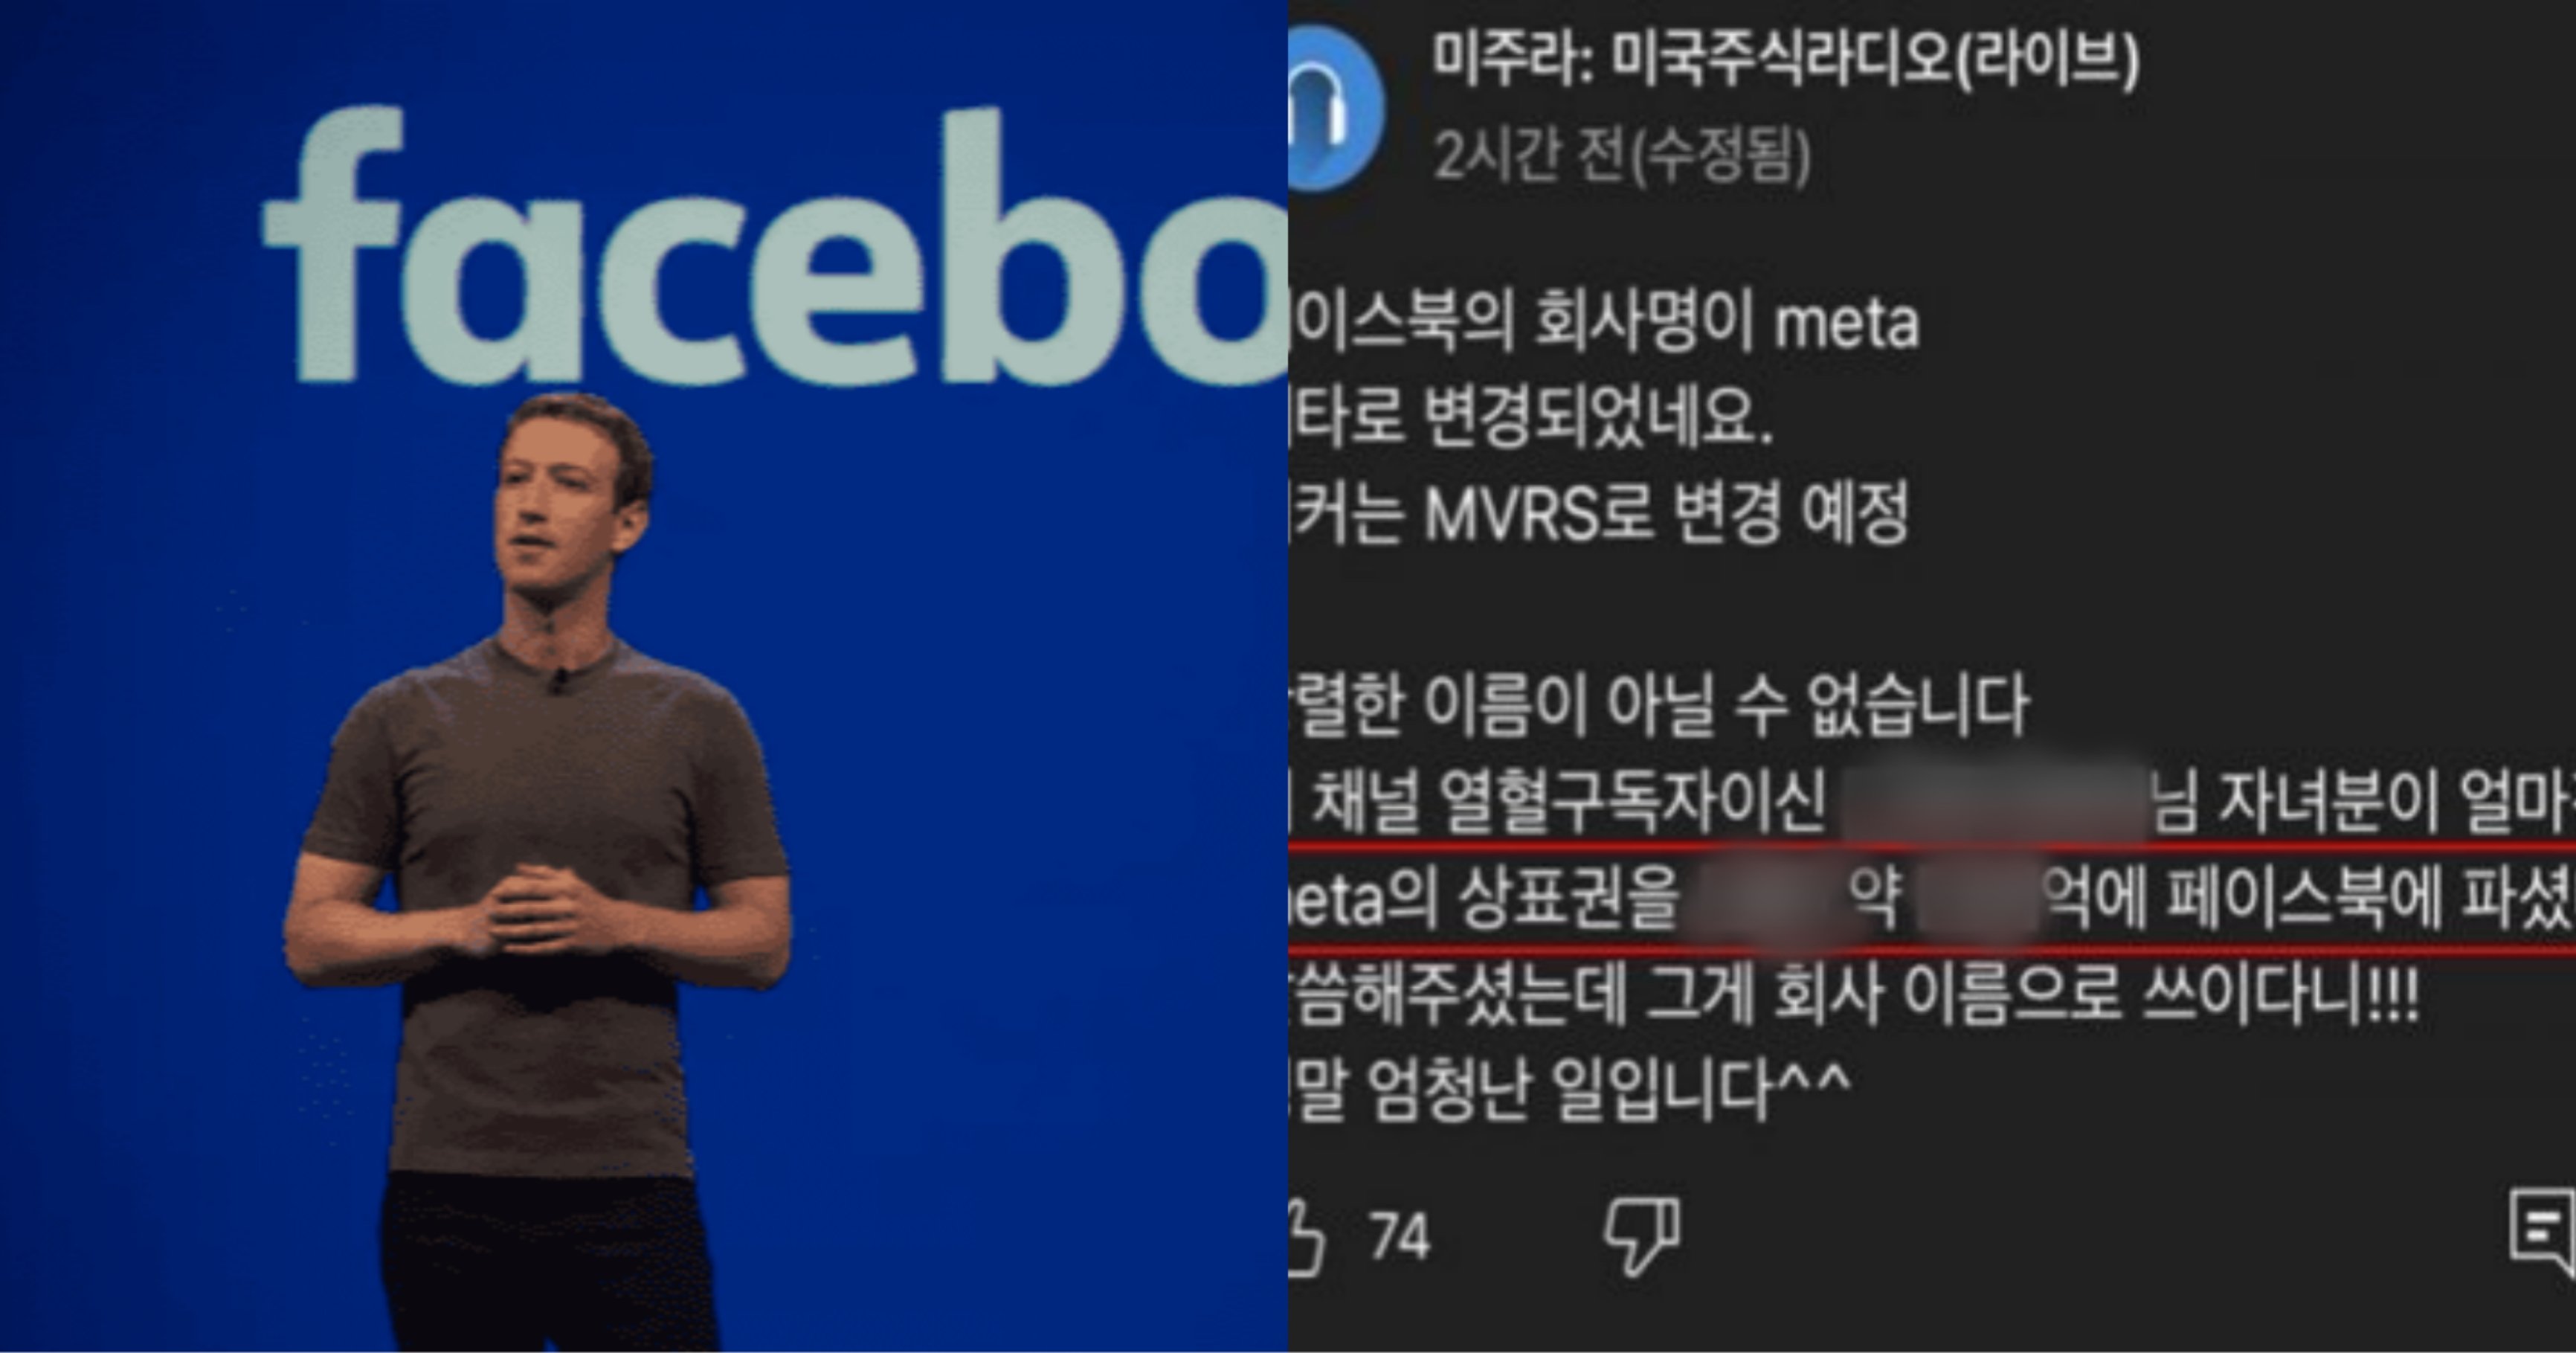 kakaotalk 20211029 193251227.jpg?resize=1200,630 - 페이스북의 새로운 회사명인 '메타' 상표권을 갖고 있던 한국인이 받은 '엄청난' 금액